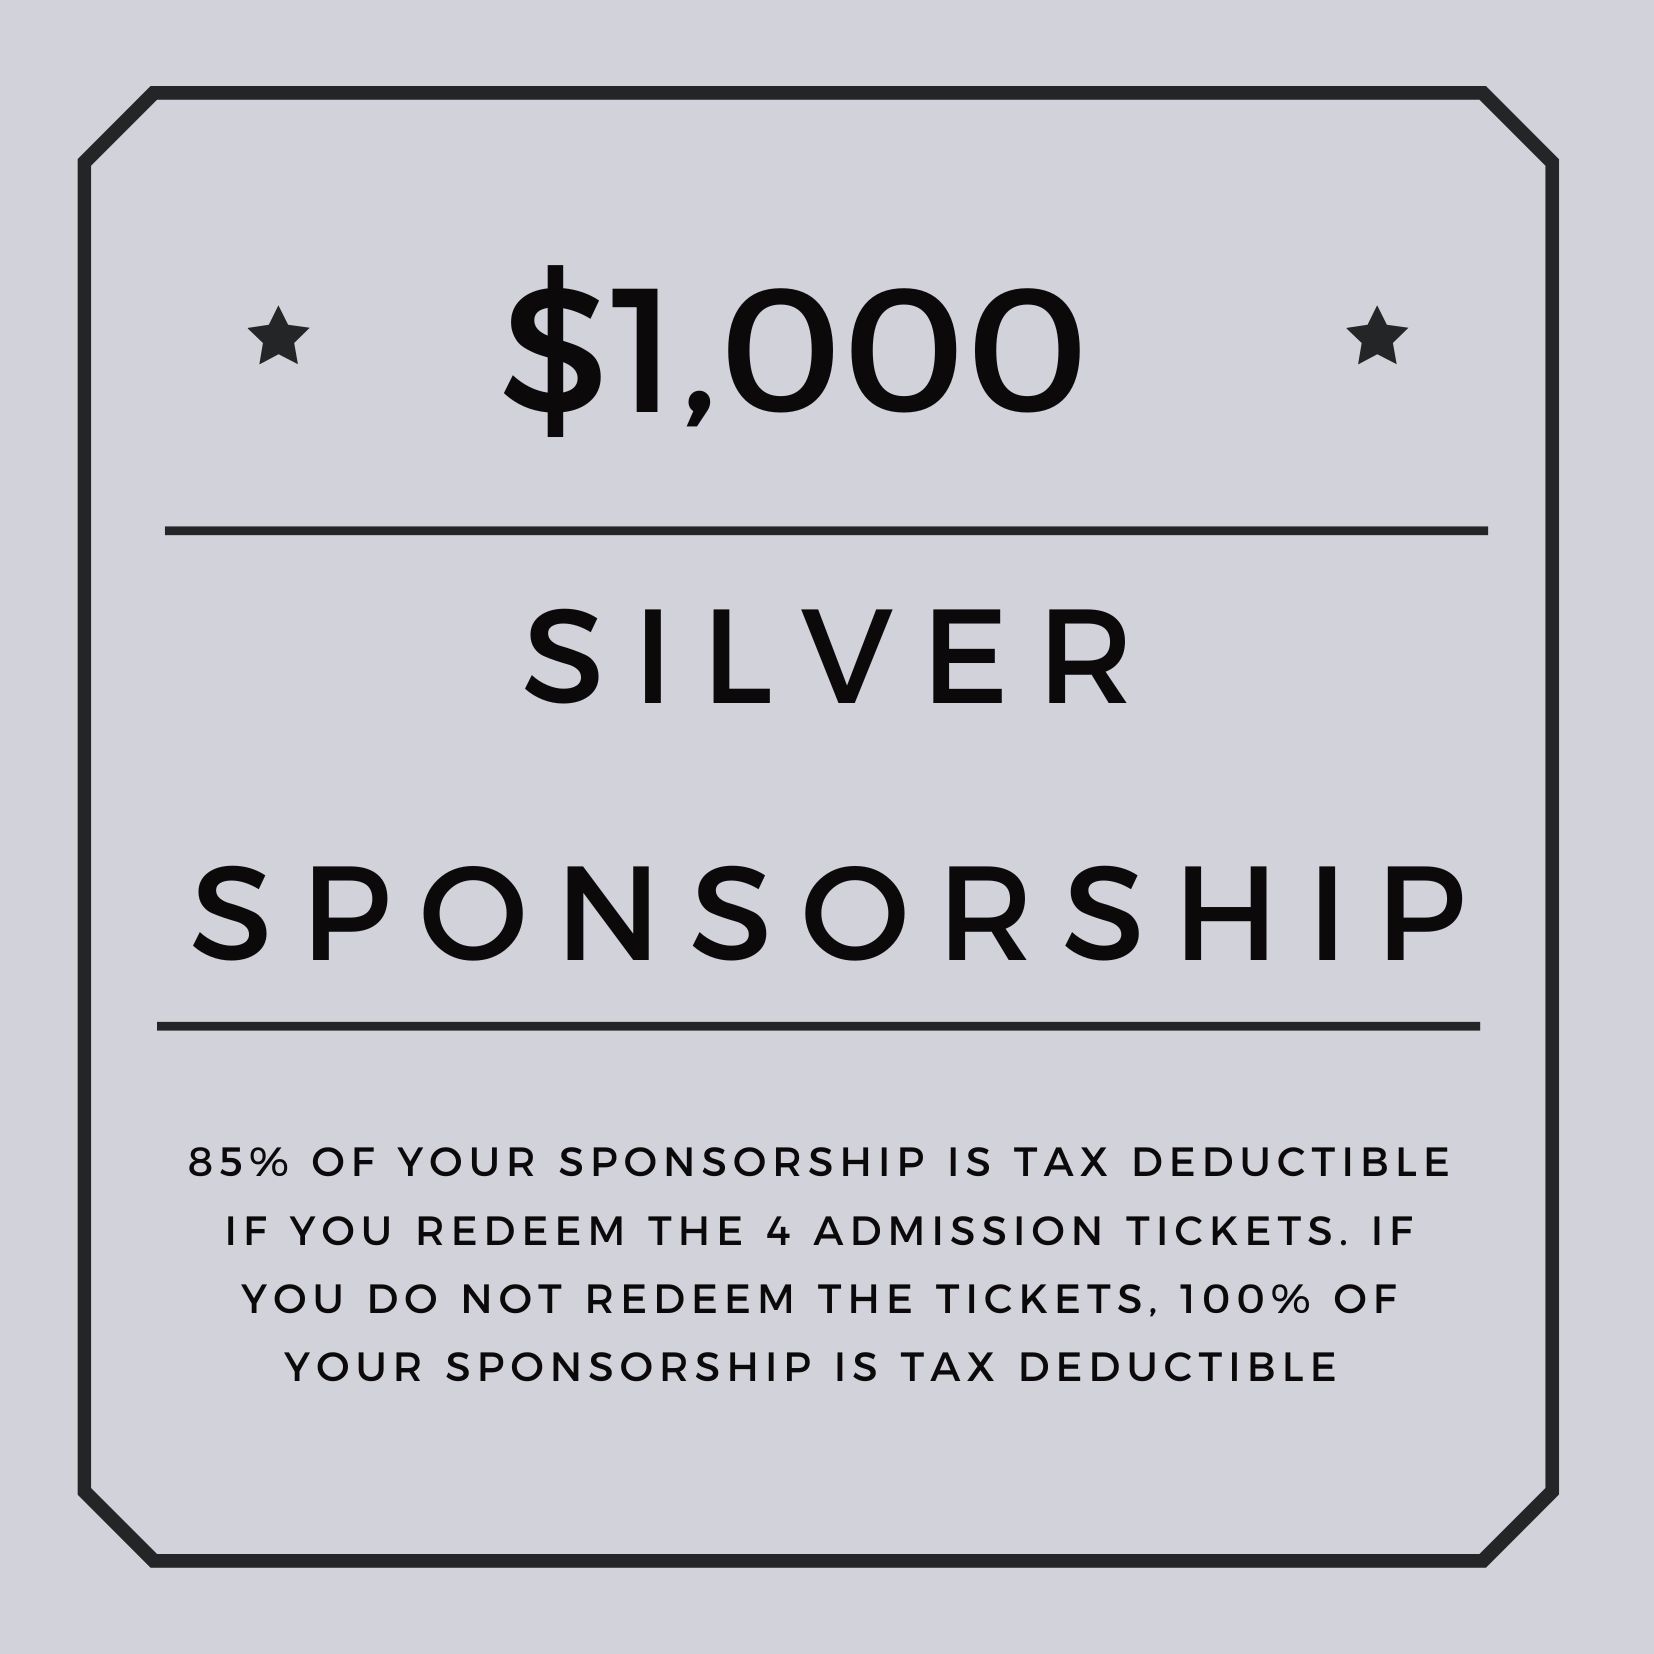 Silver Sponsorship Level ($1,000)